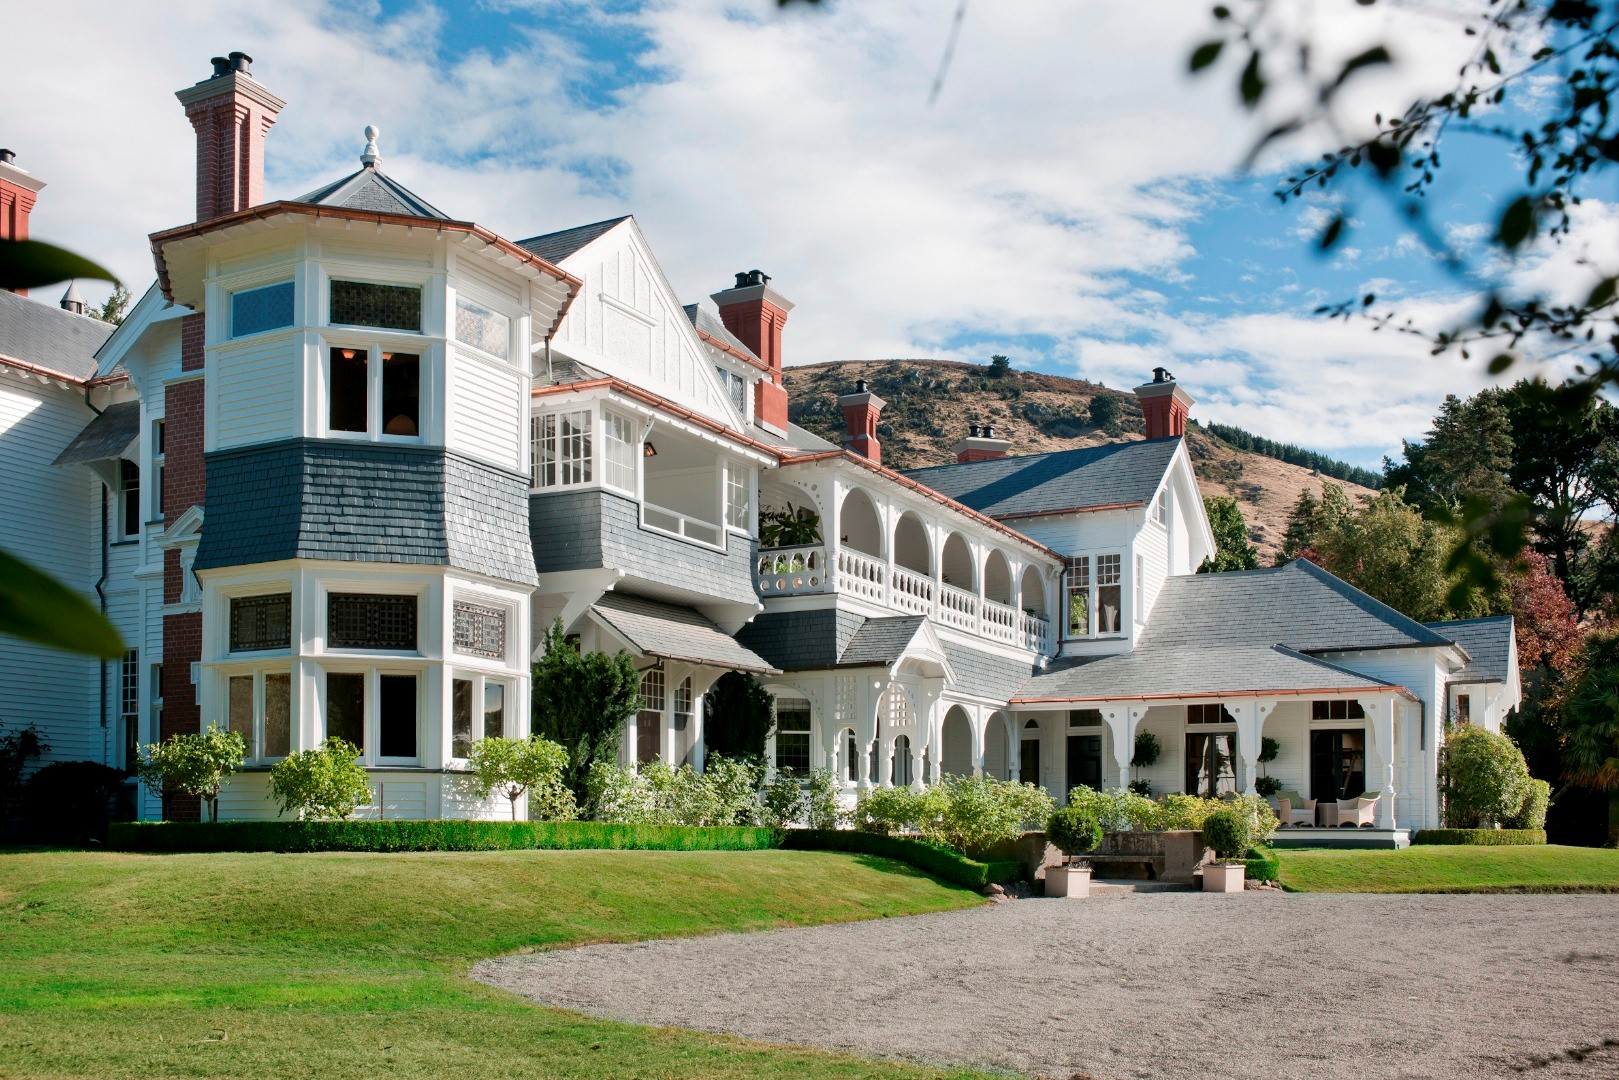 South Island, New Zealand, New Zealand, Otahuna Lodge